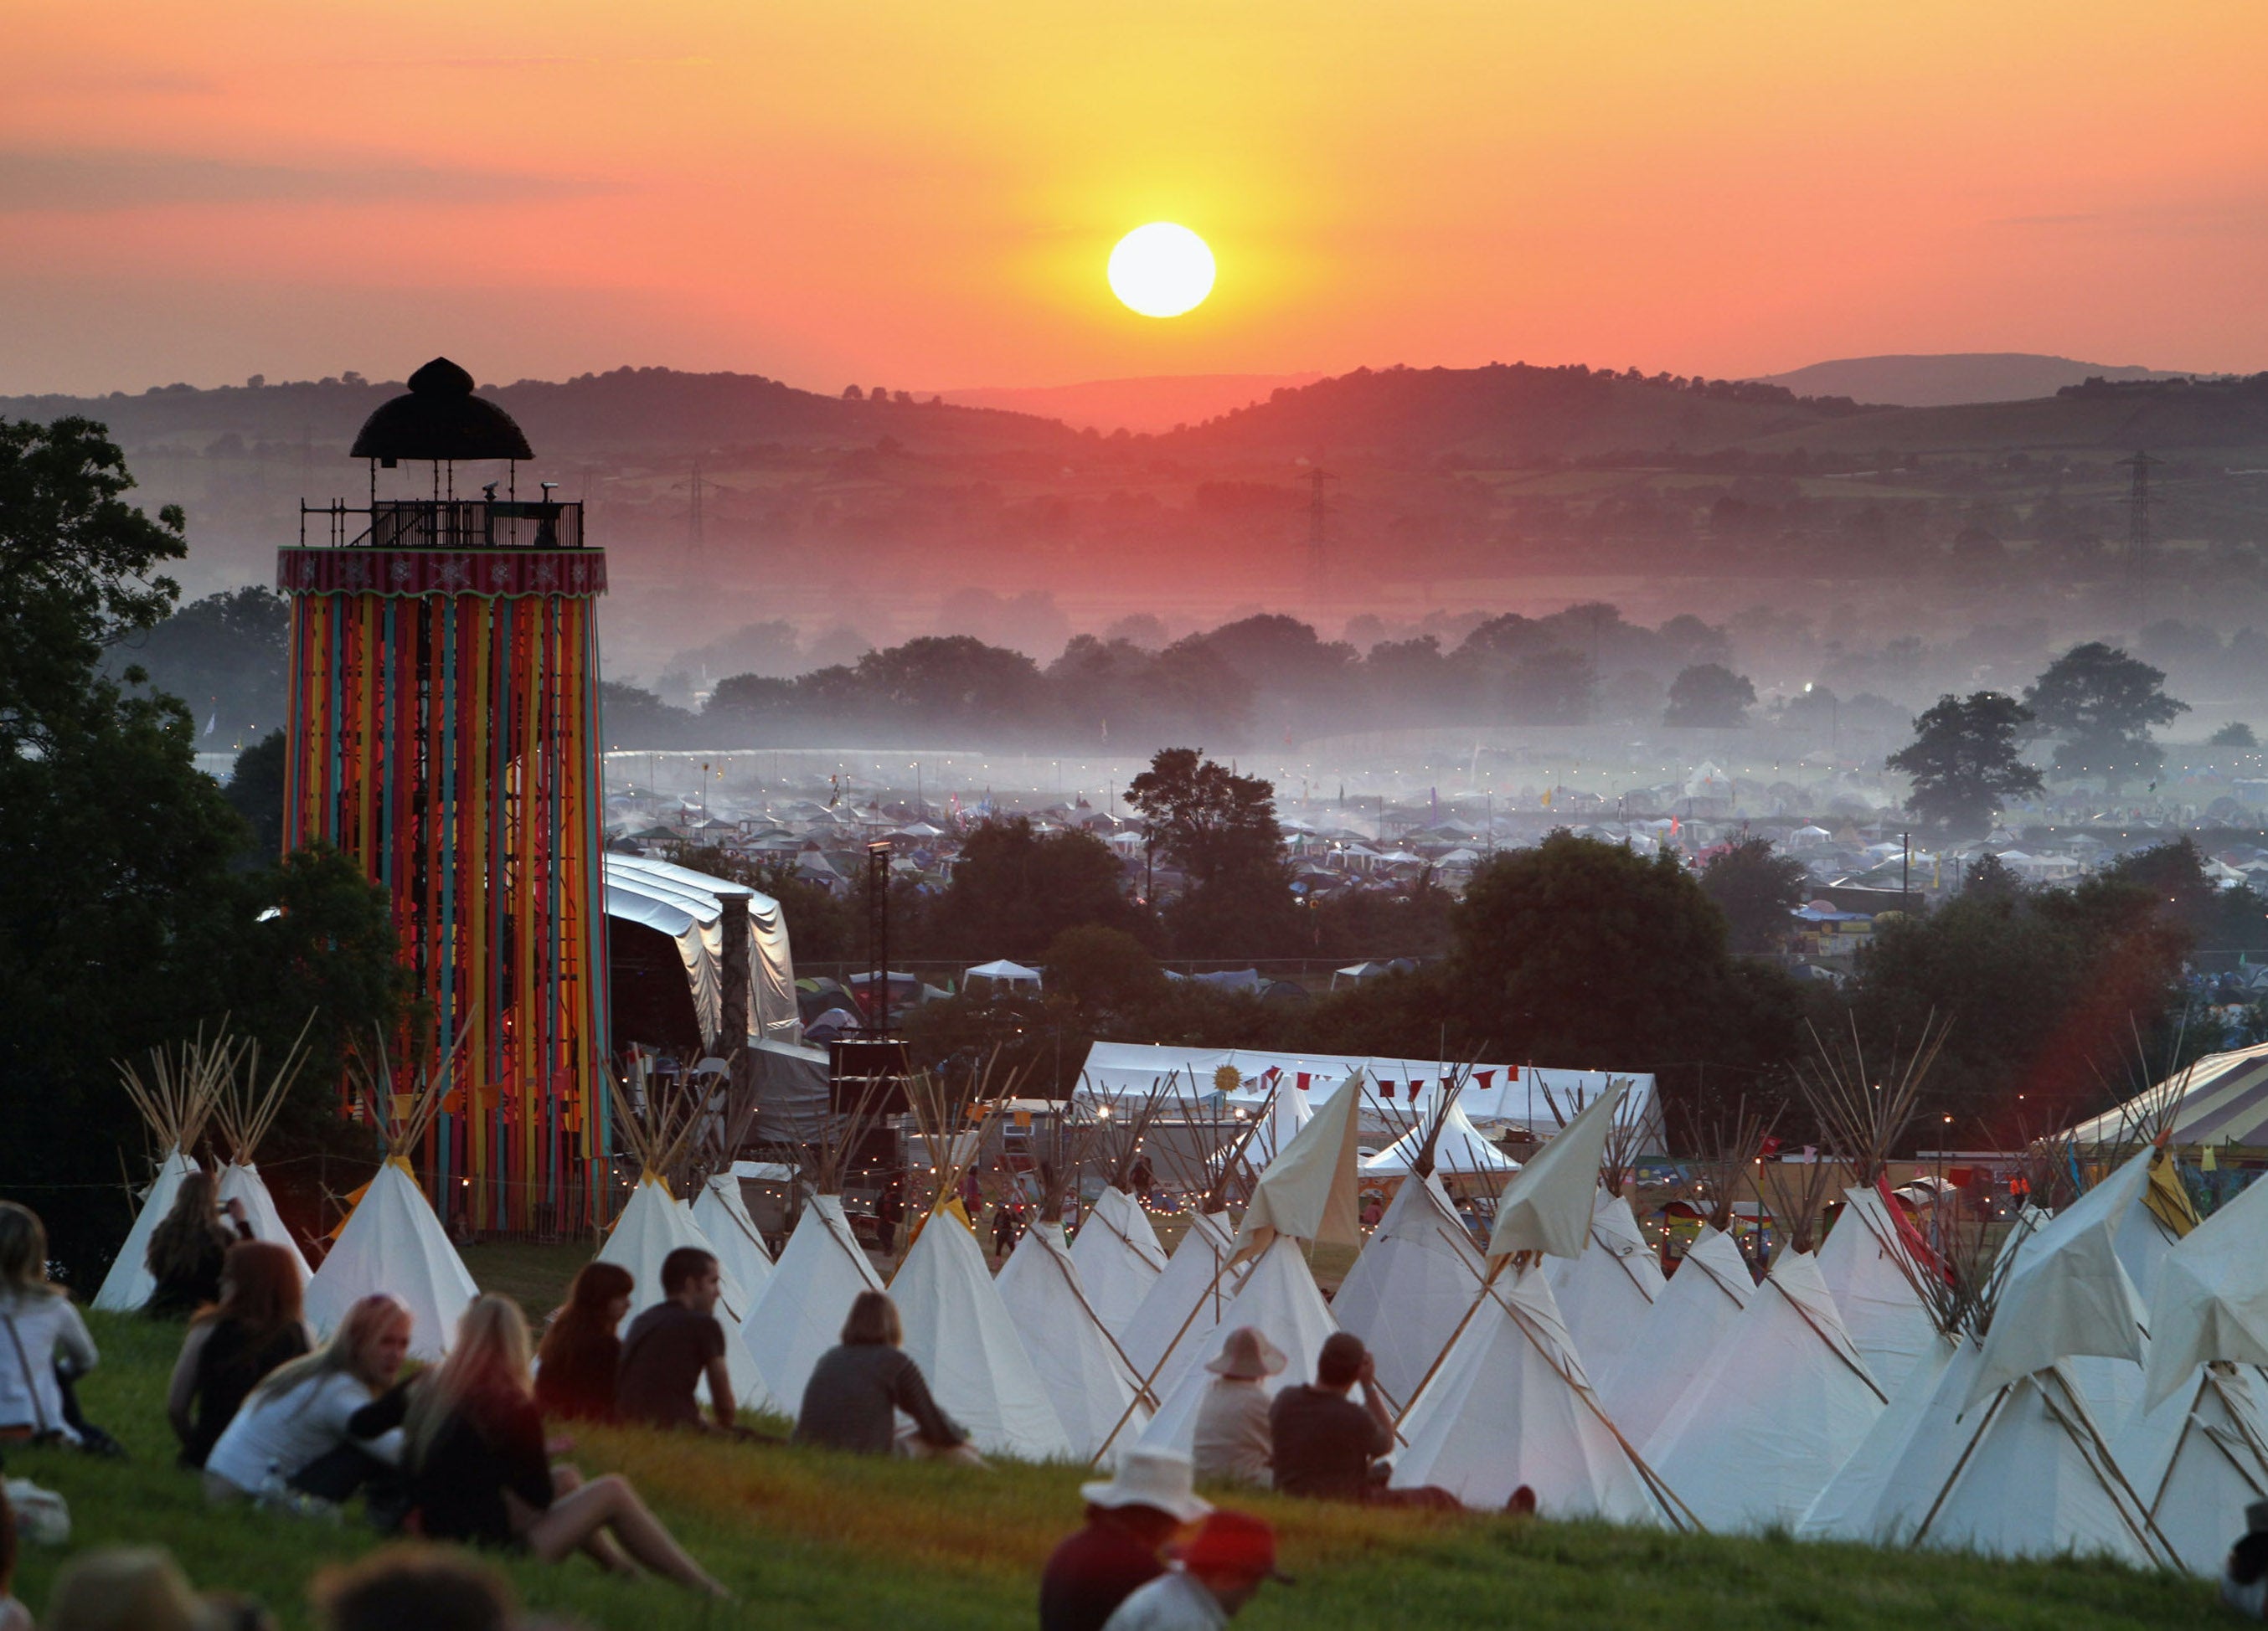 Festivals like Glastonbury require months of planning